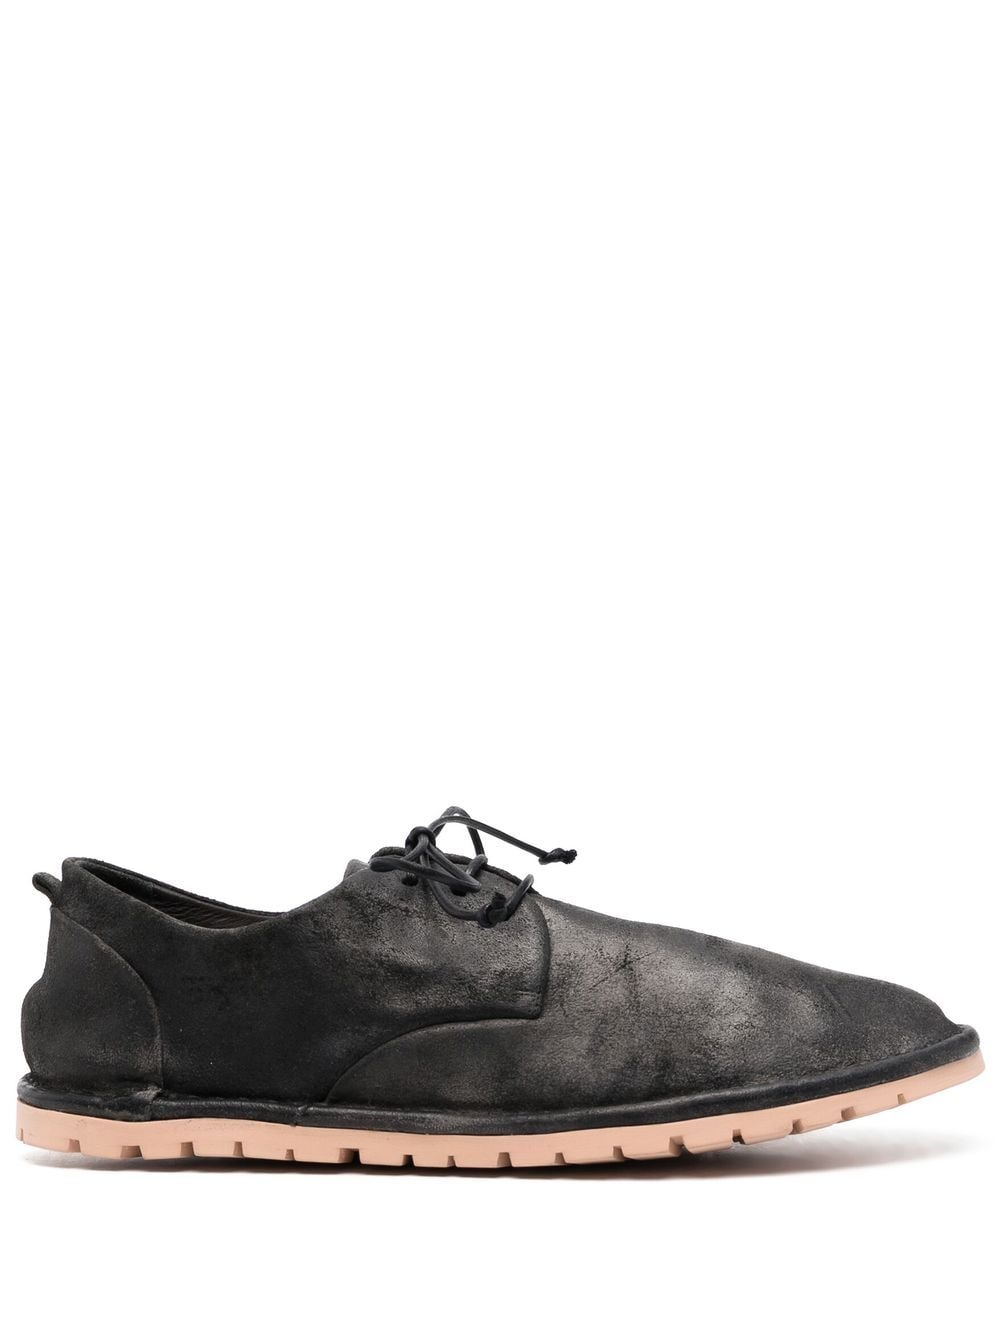 Marsèll calf leather derby shoes - Black von Marsèll